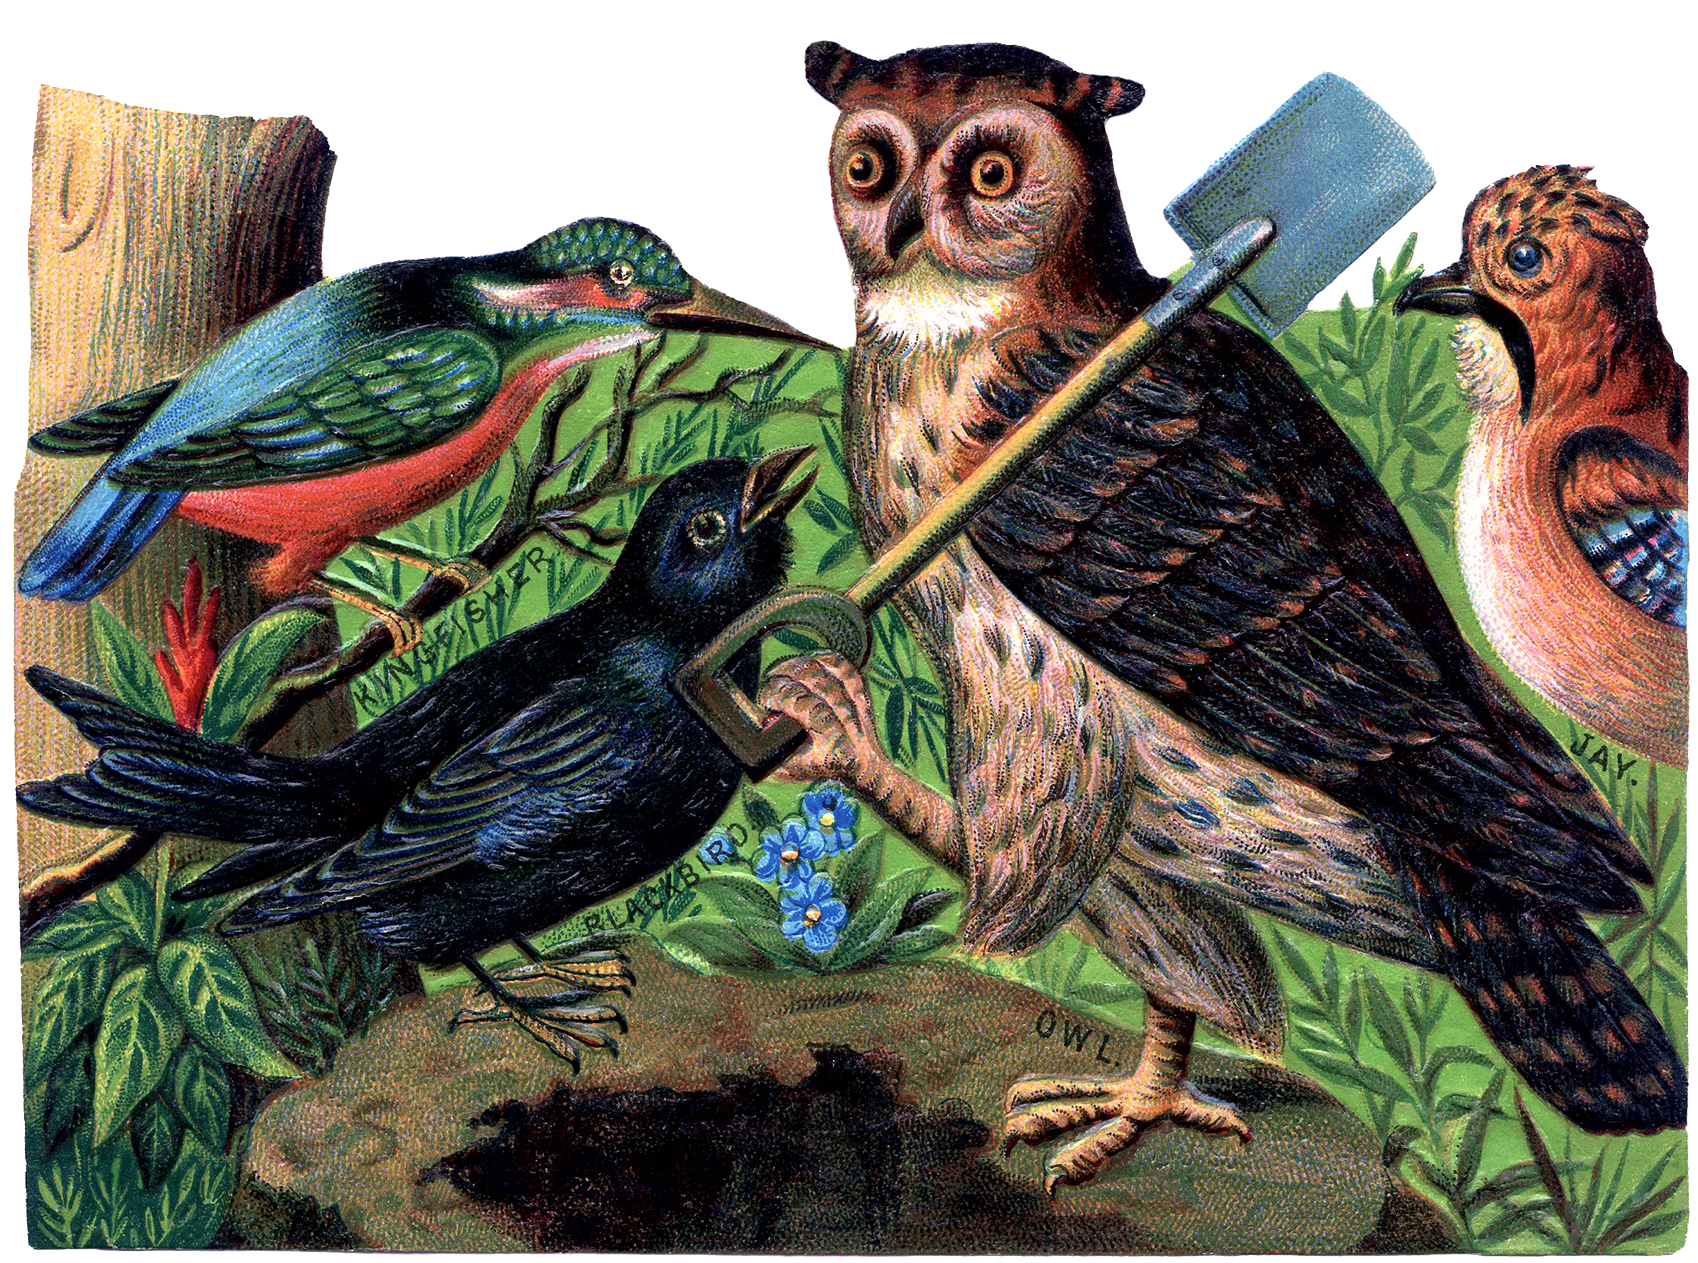 Vintage Halloween Owl Image - The Graphics Fairy1698 x 1263